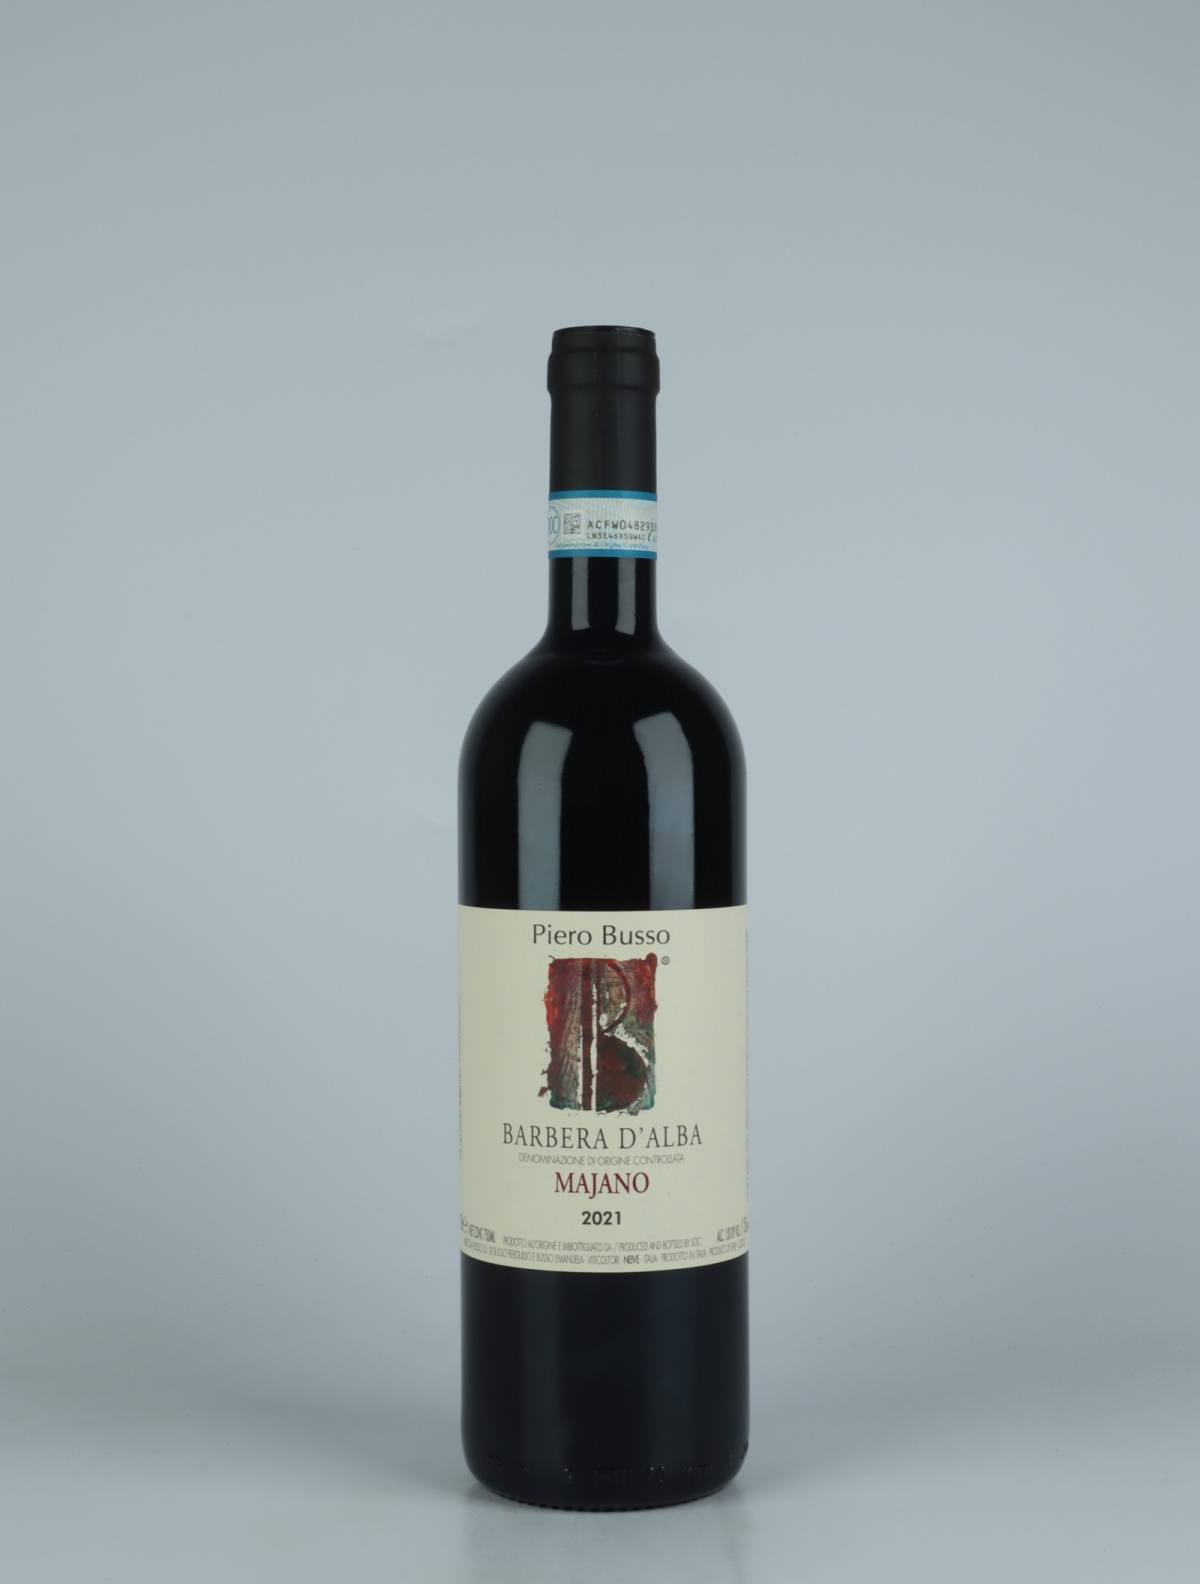 A bottle 2021 Barbera d'Alba - Majano Red wine from Piero Busso, Piedmont in Italy